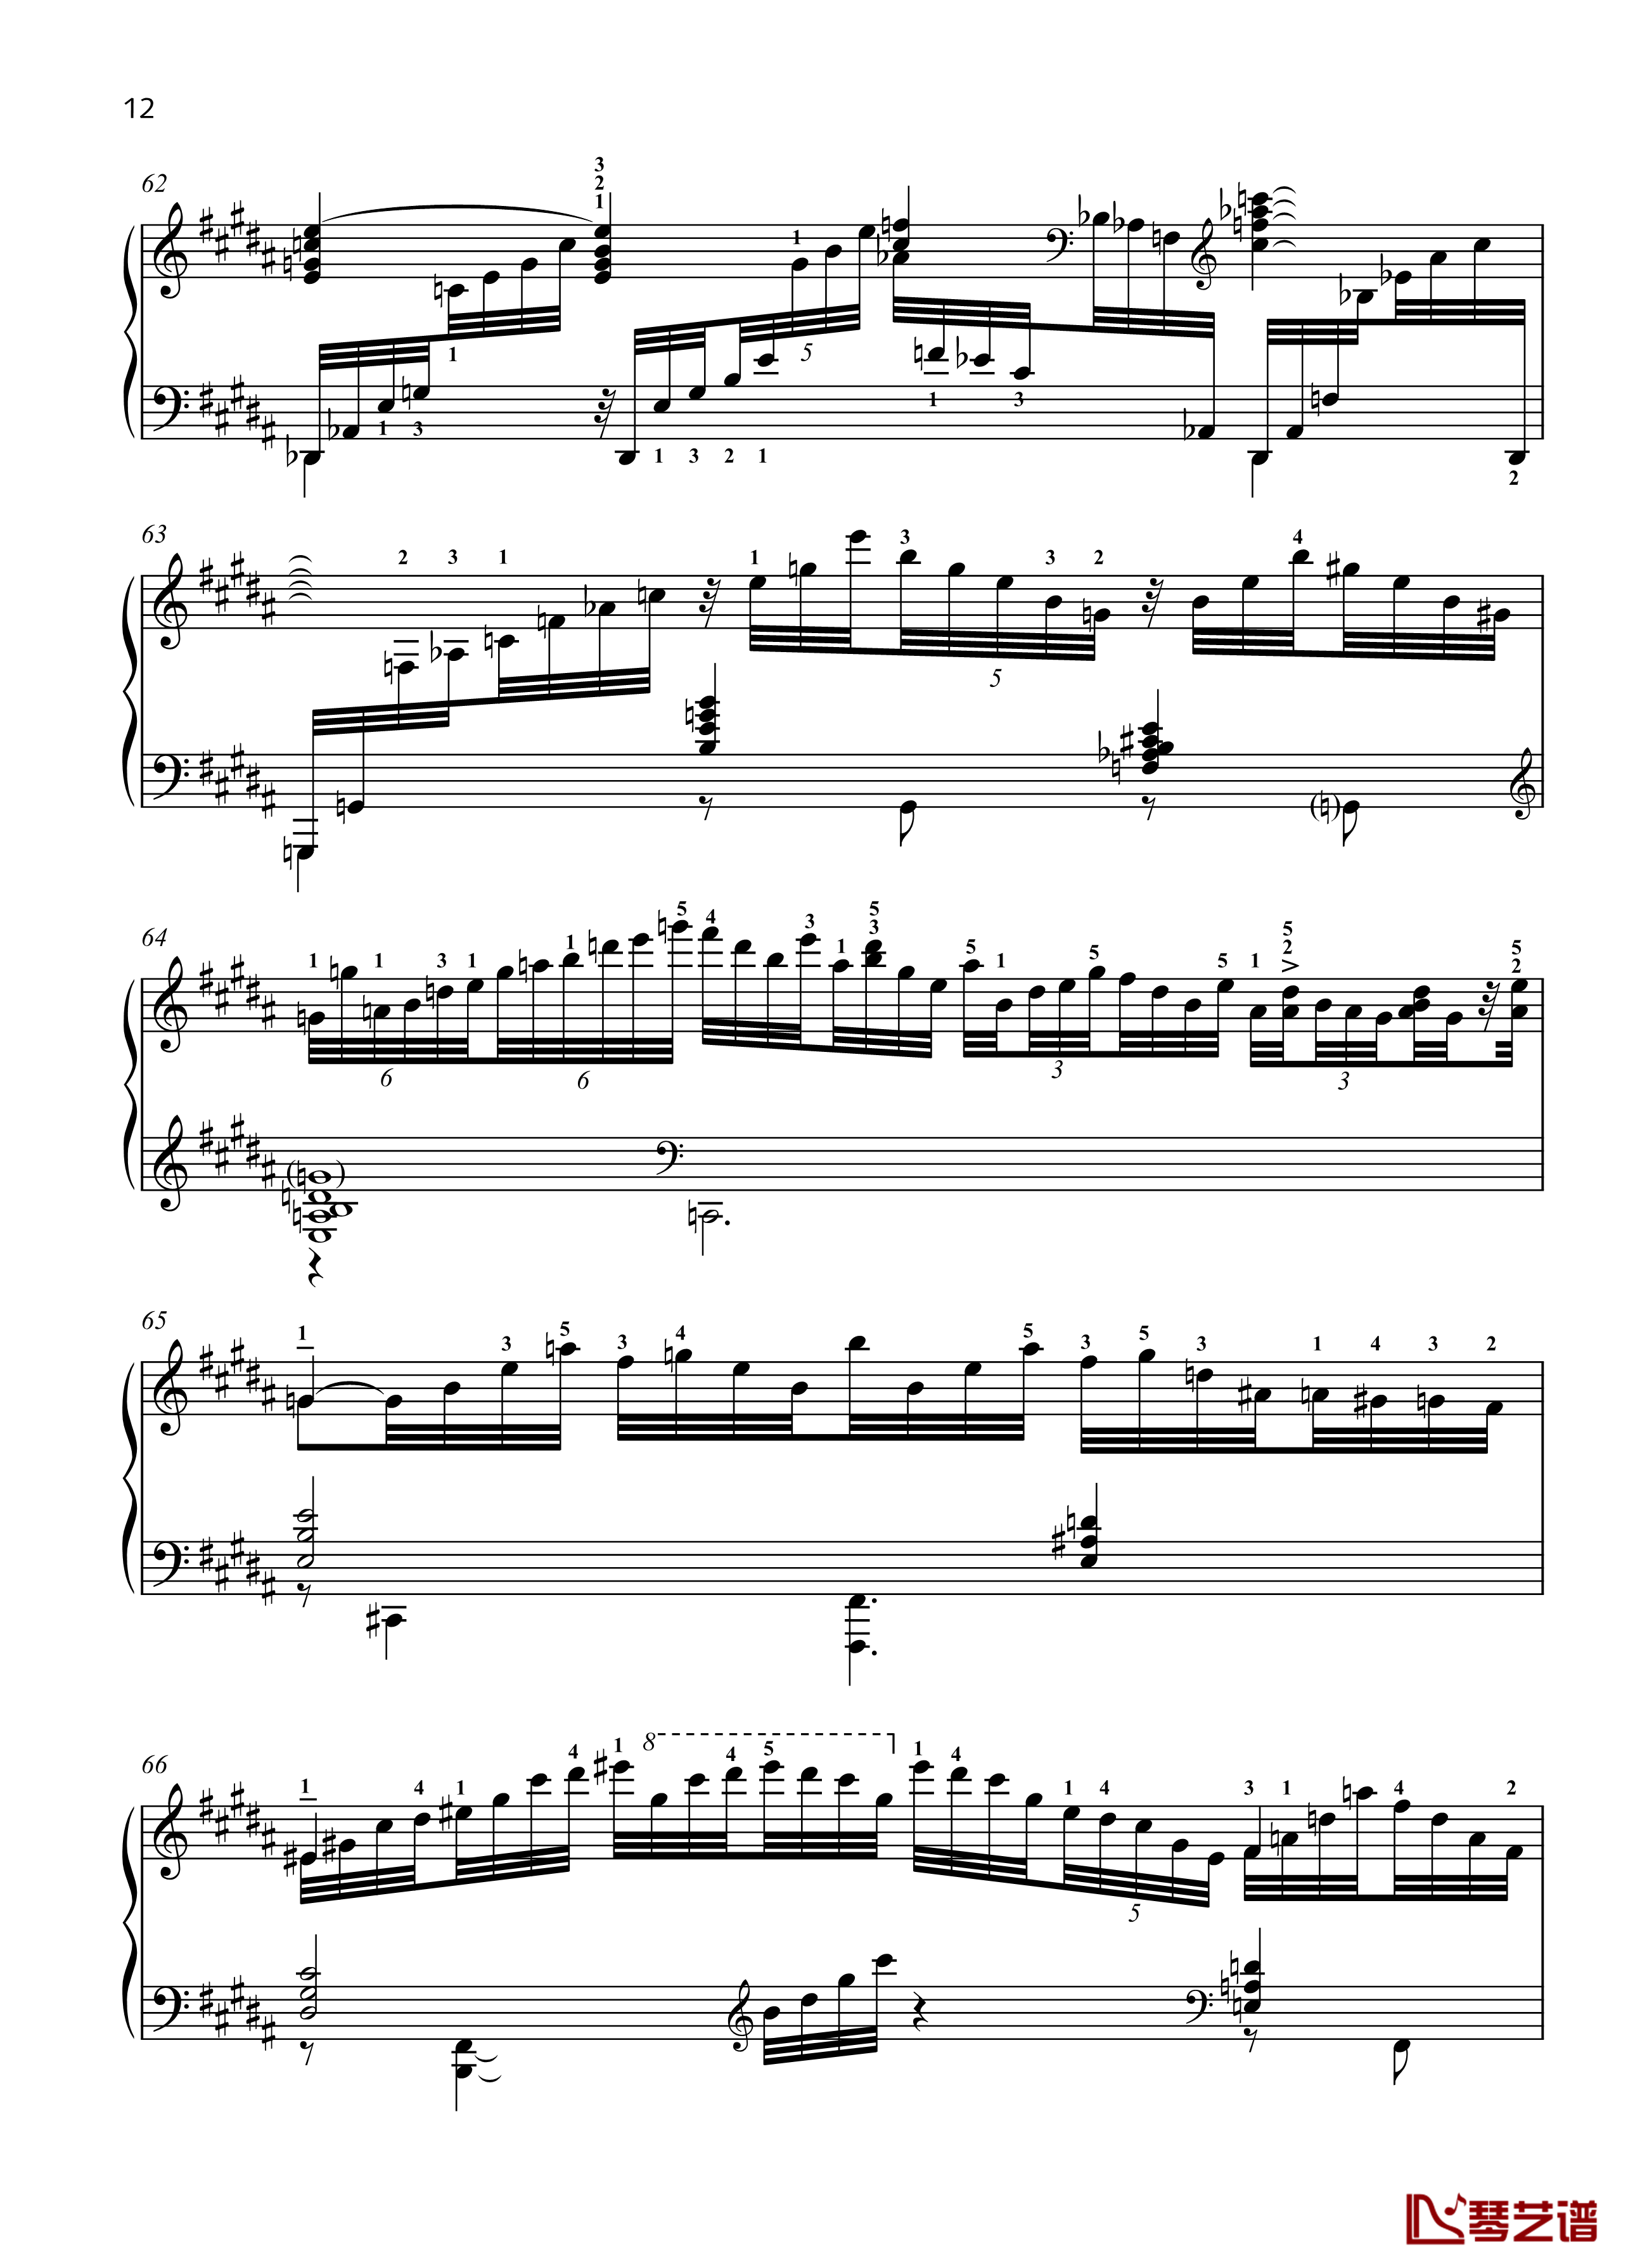 No. 4. Reminiscence钢琴谱-带指法-八首音乐会练习曲  Eight Concert ?tudes Op 40 - -爵士-尼古拉·凯帕斯汀12